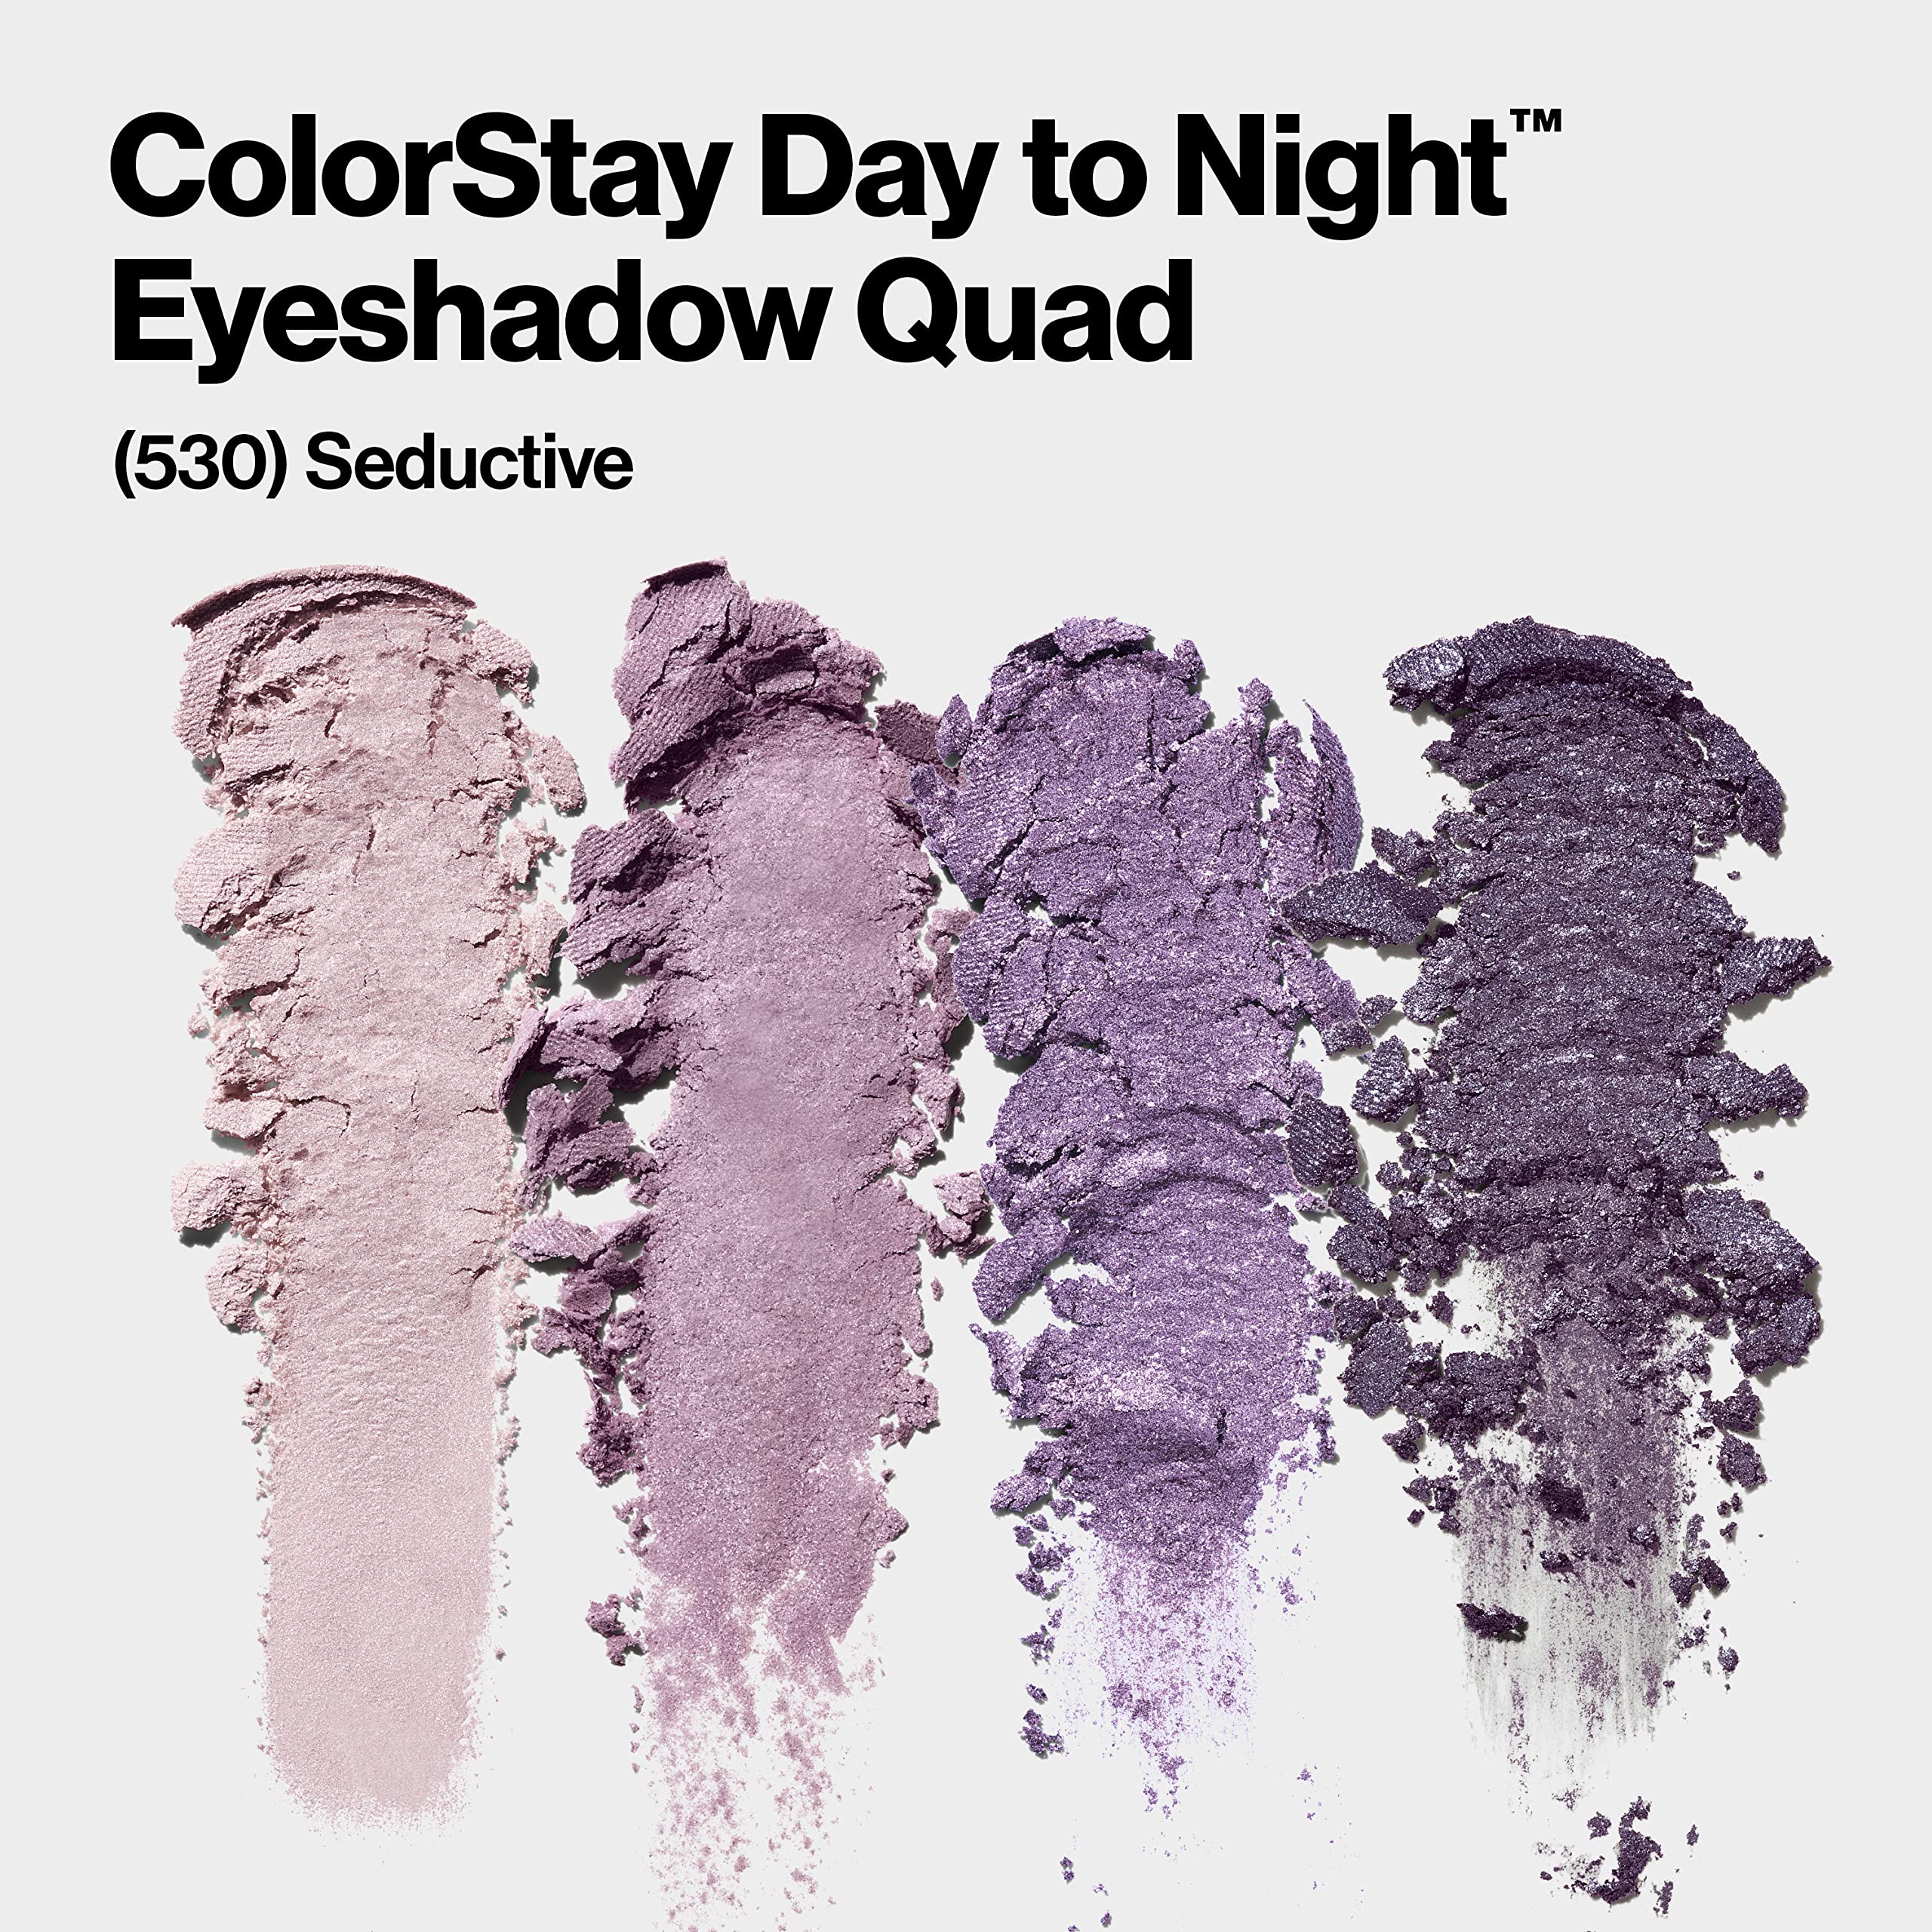 REVLON ColorStay Day to Night Eyeshadow Quad